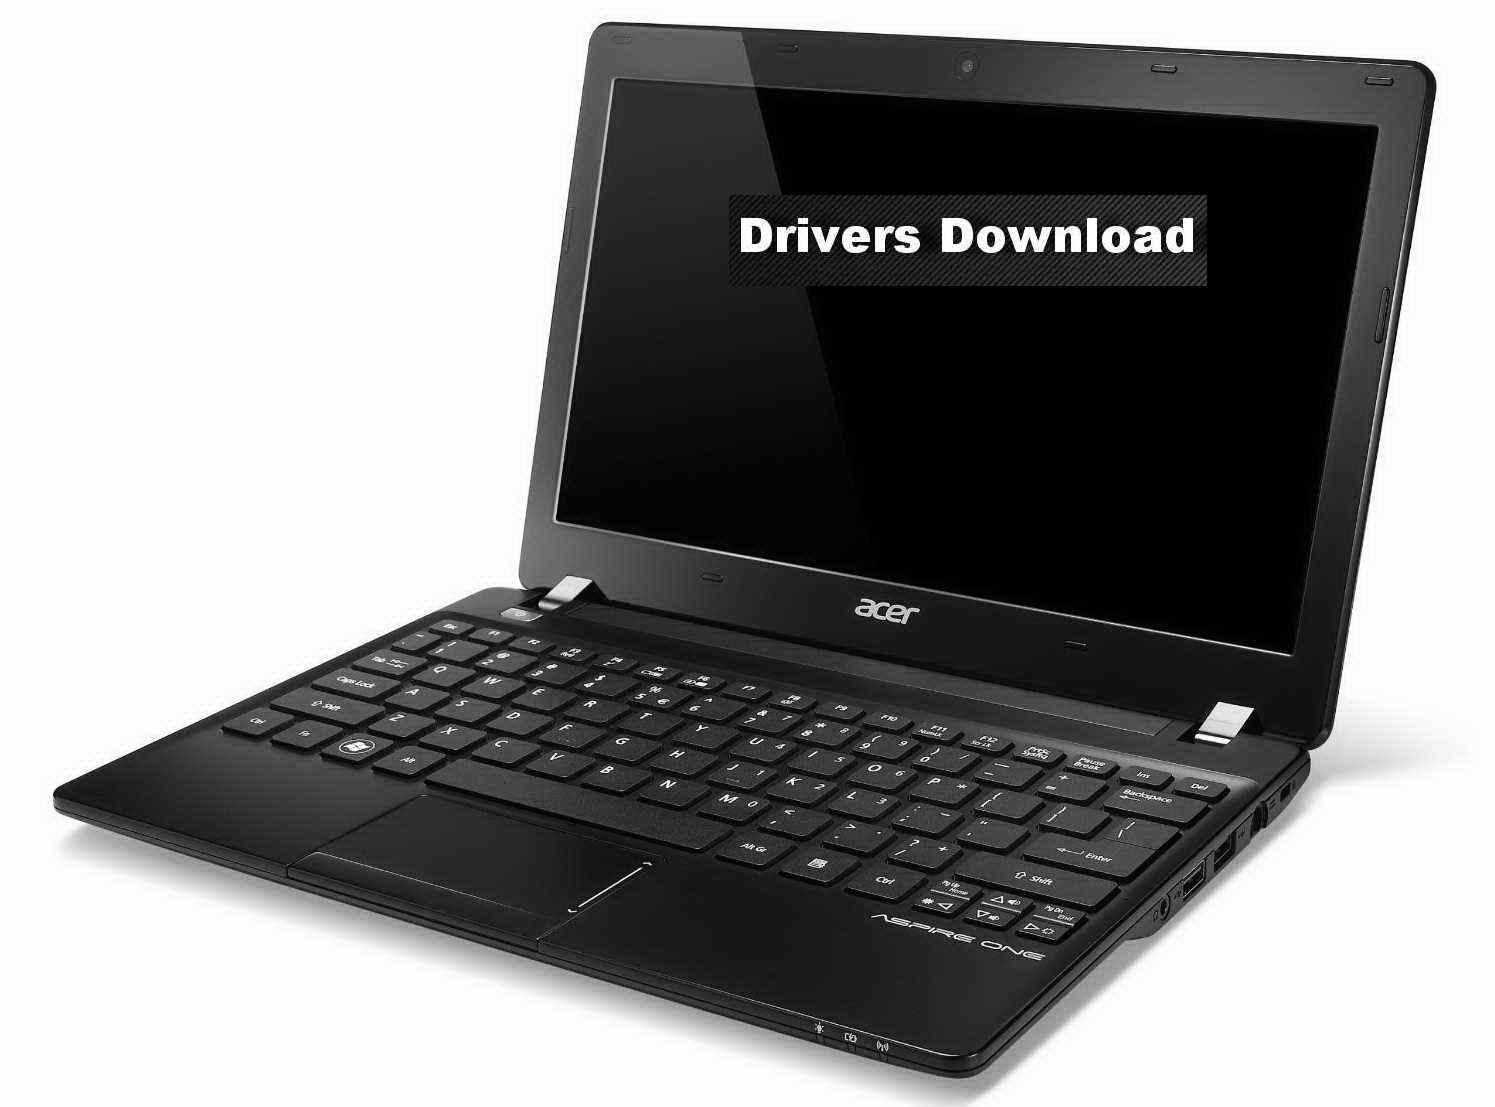 Hp Designjet 5500ps Driver Download Windows 7